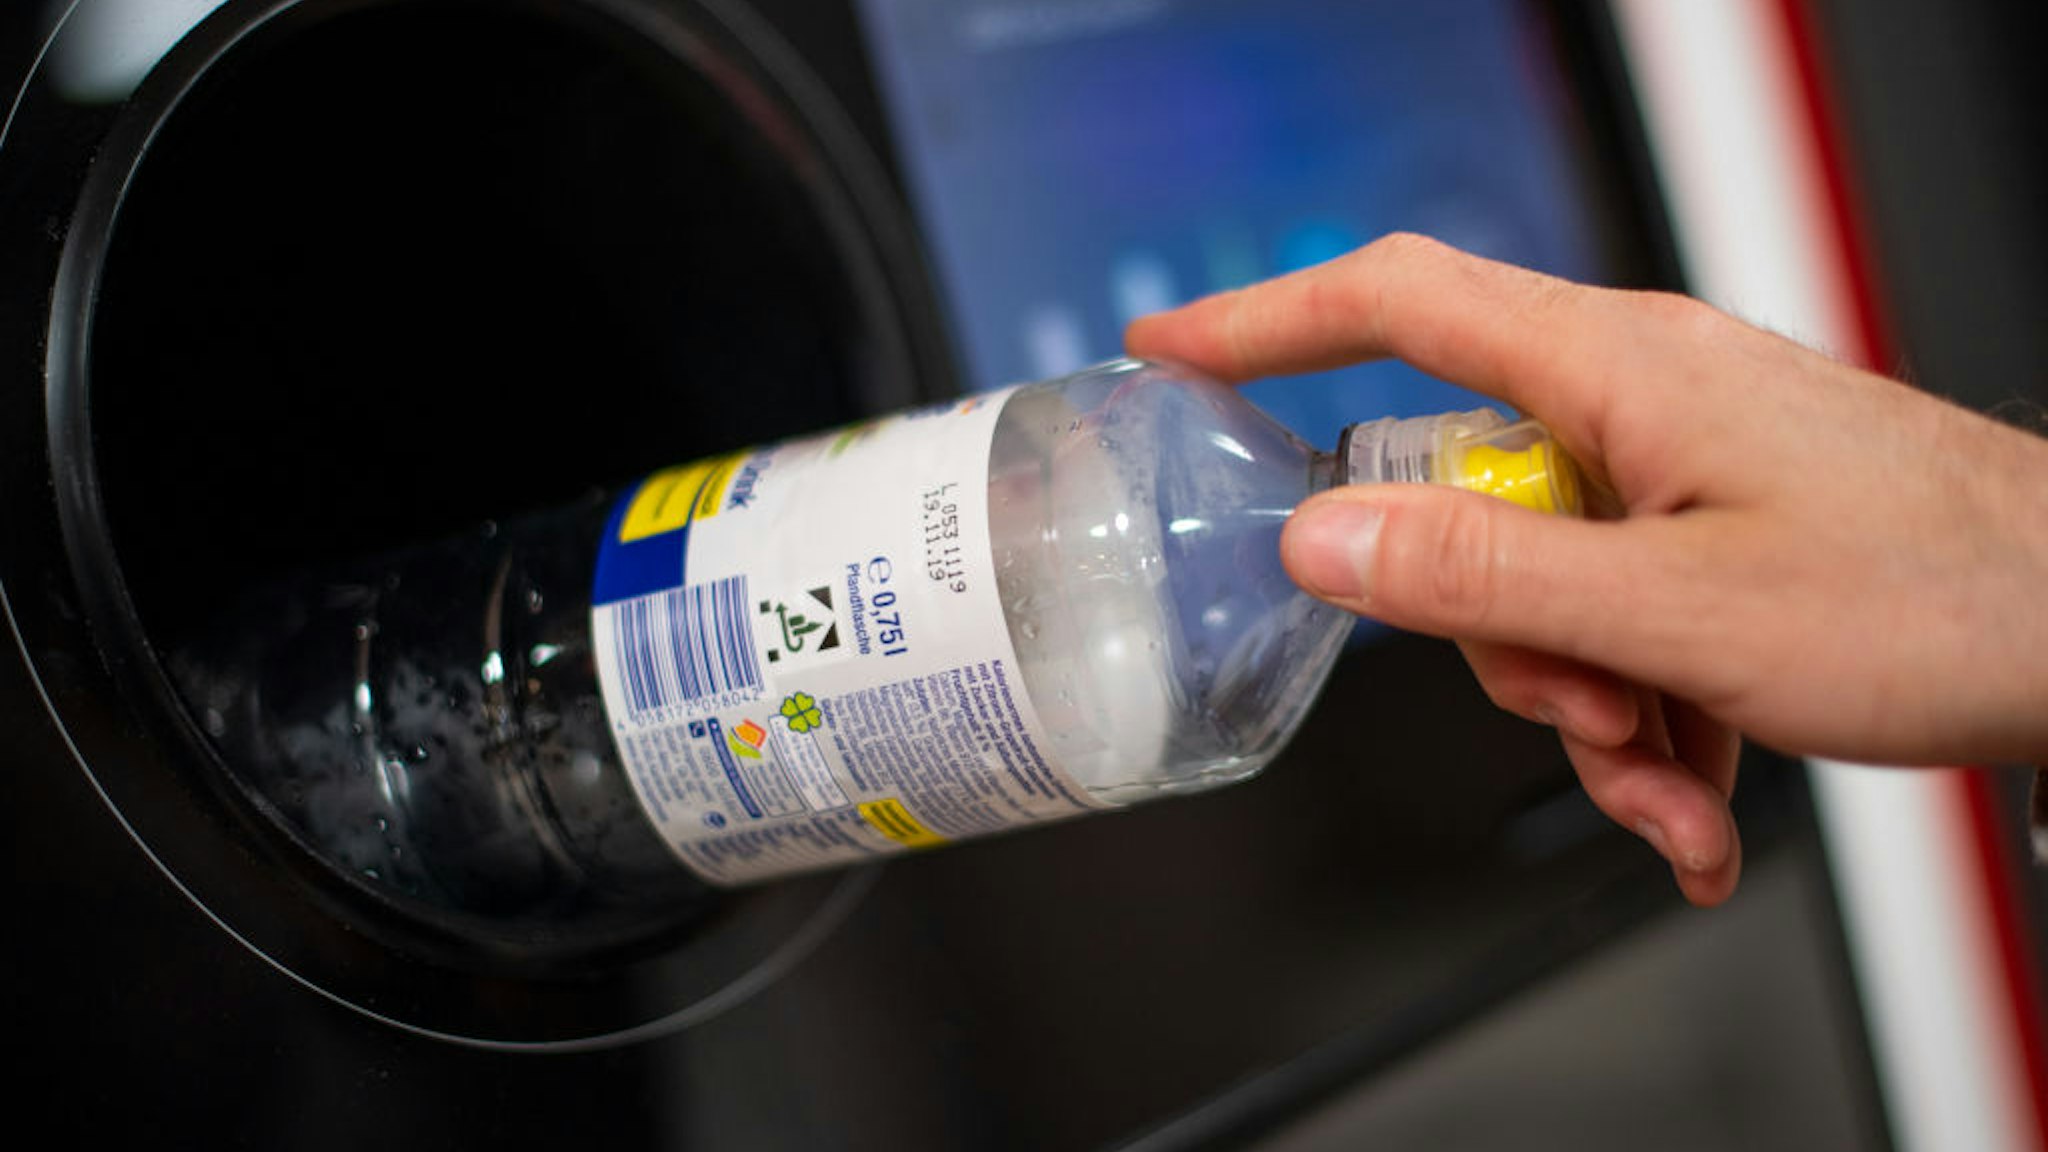 A man puts a deposit bottle into a deposit bottle machine in a supermarket. Photo: Monika Skolimowska/dpa-Zentralbild/ZB